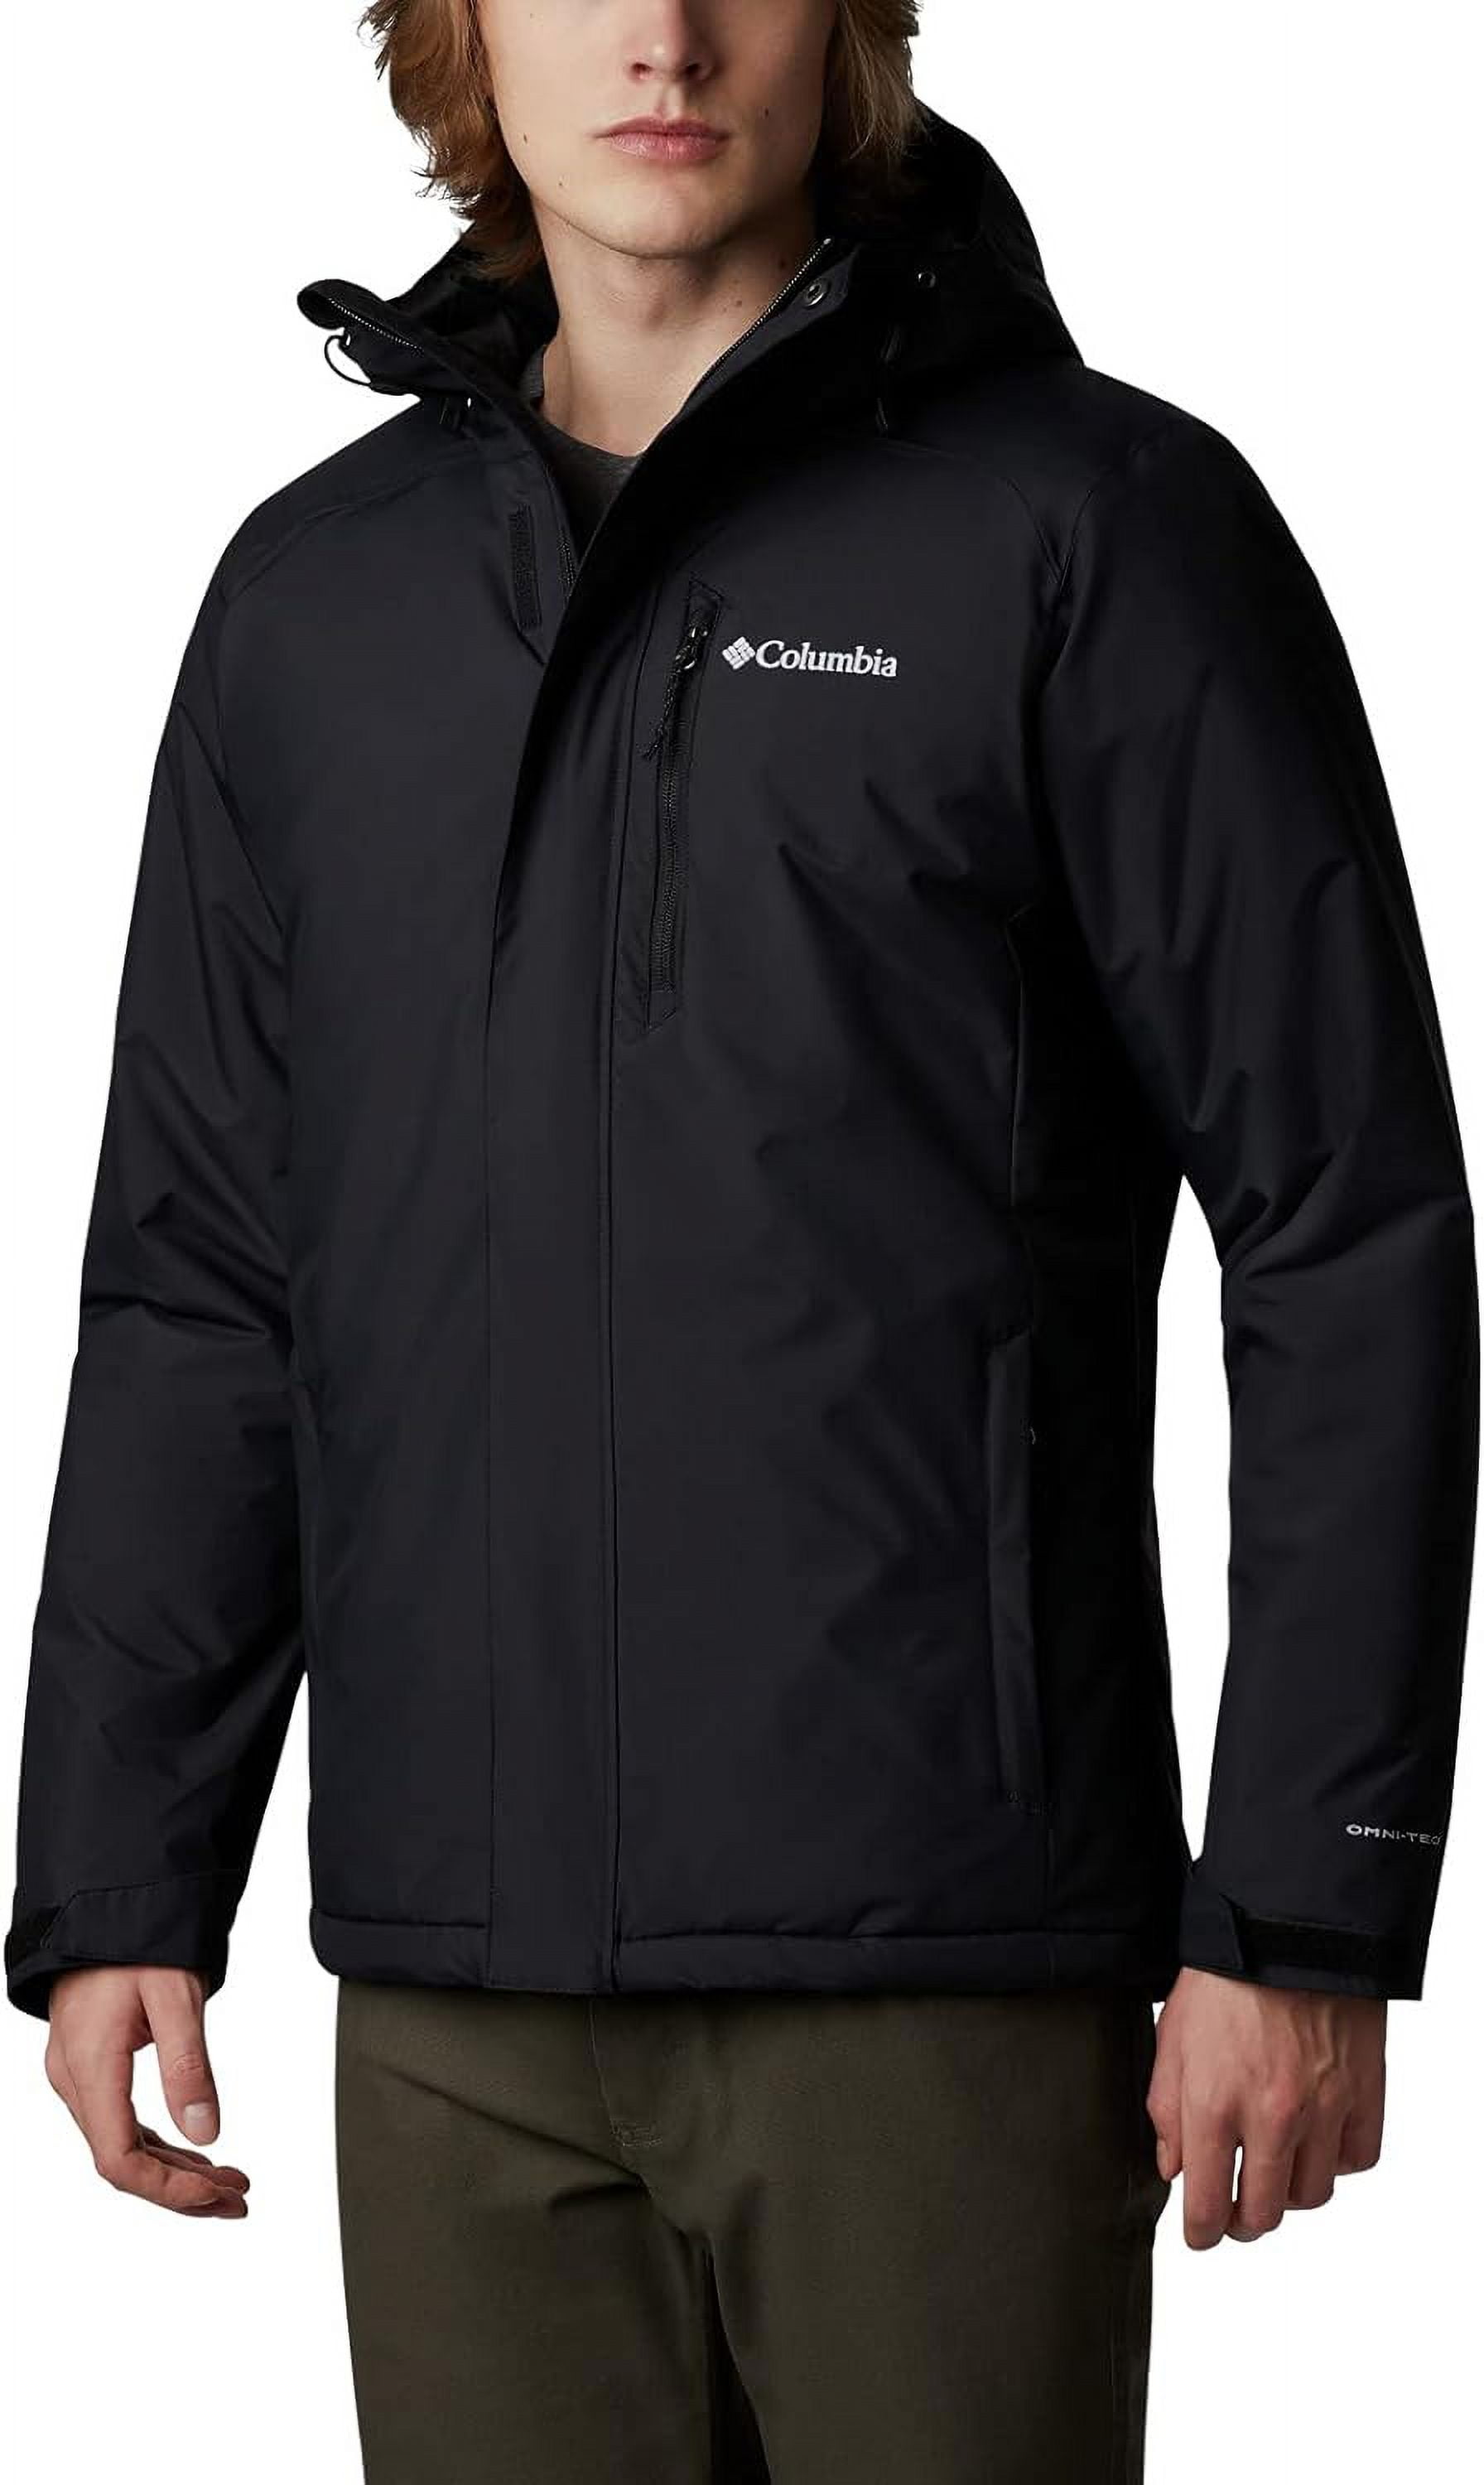 Columbia Men's Tipton Peak Insulated Jacket Black Medium - Walmart.com